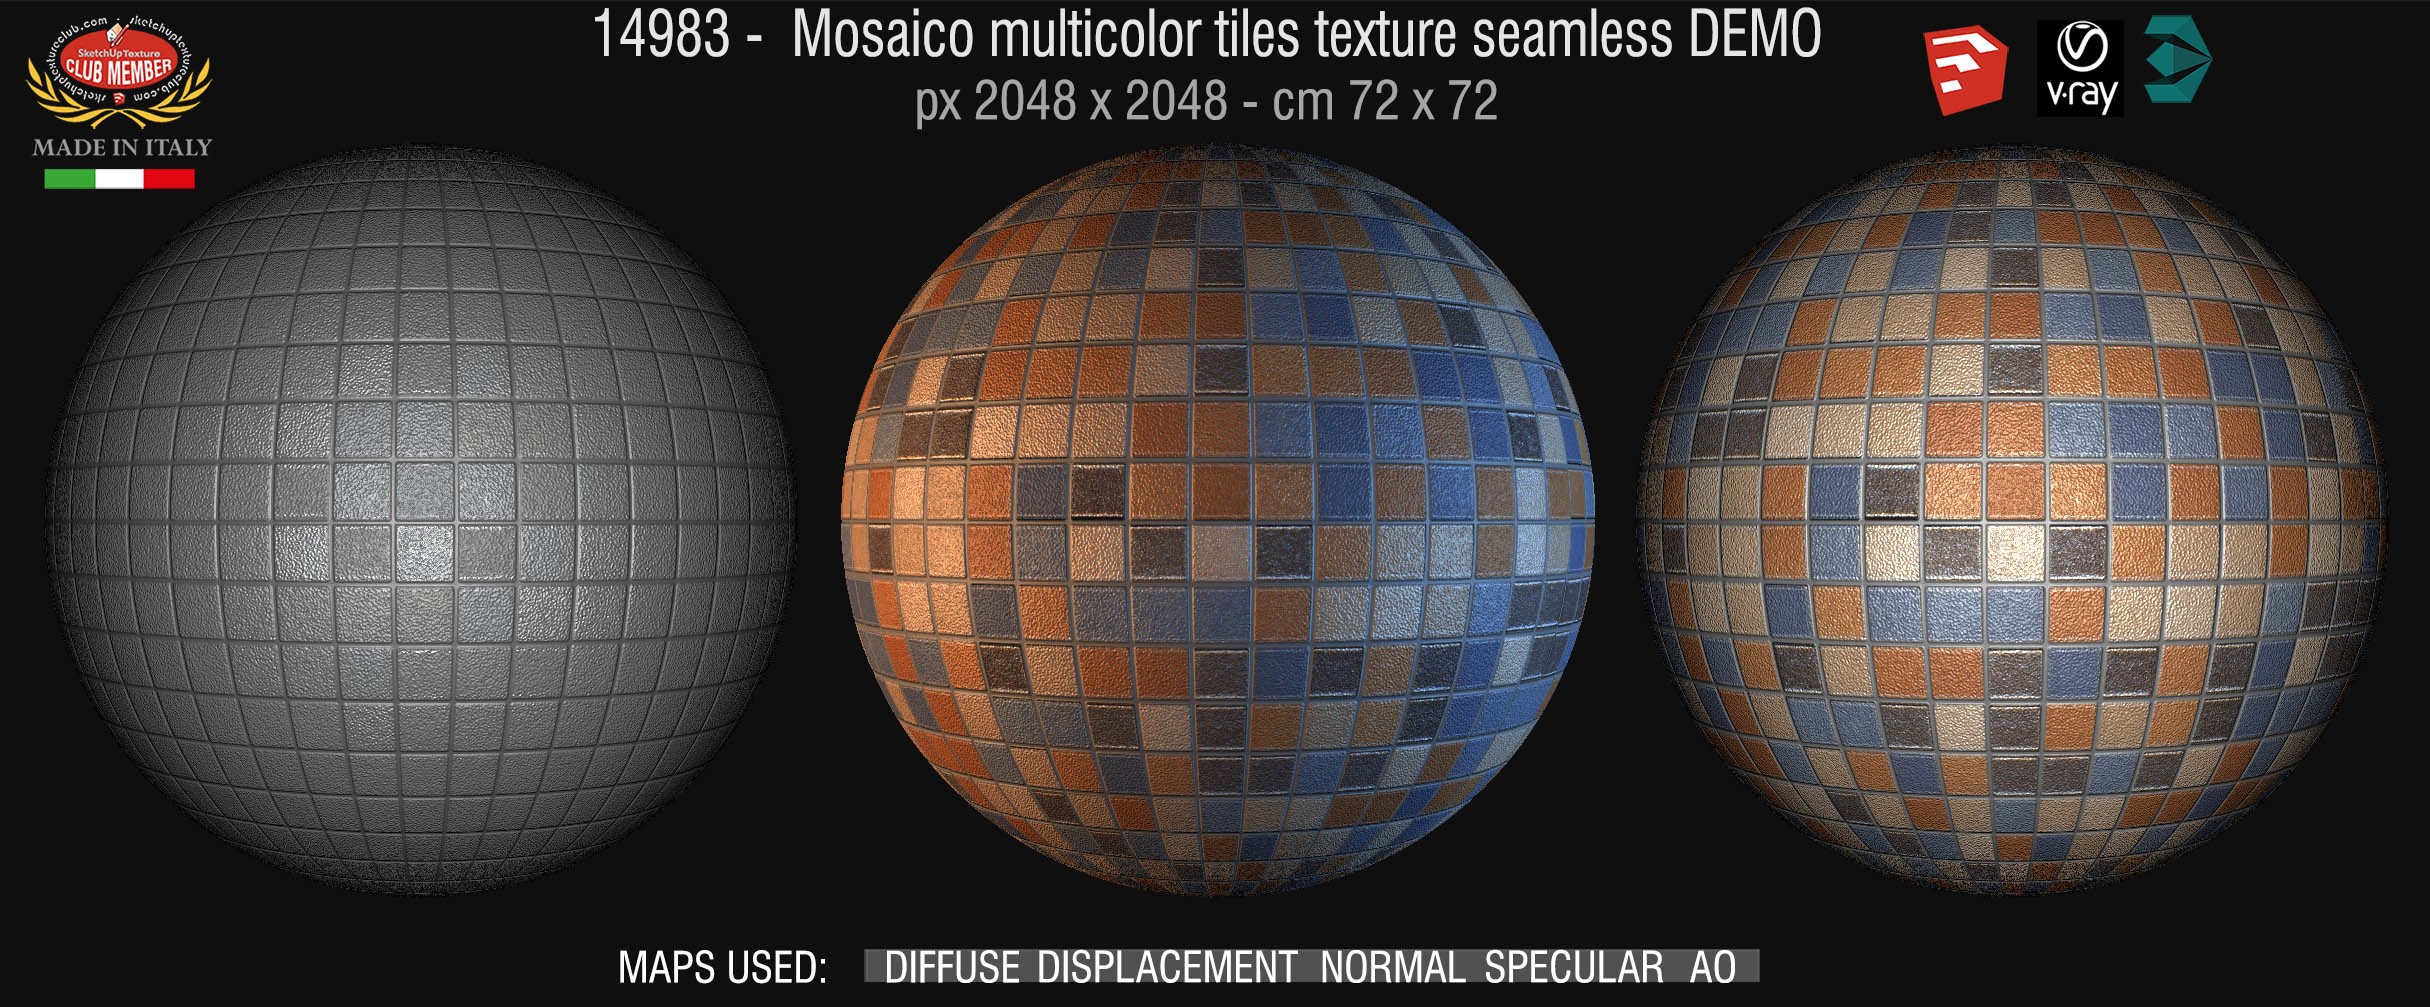 14983 Mosaico multicolor tiles texture seamless + maps DEMO